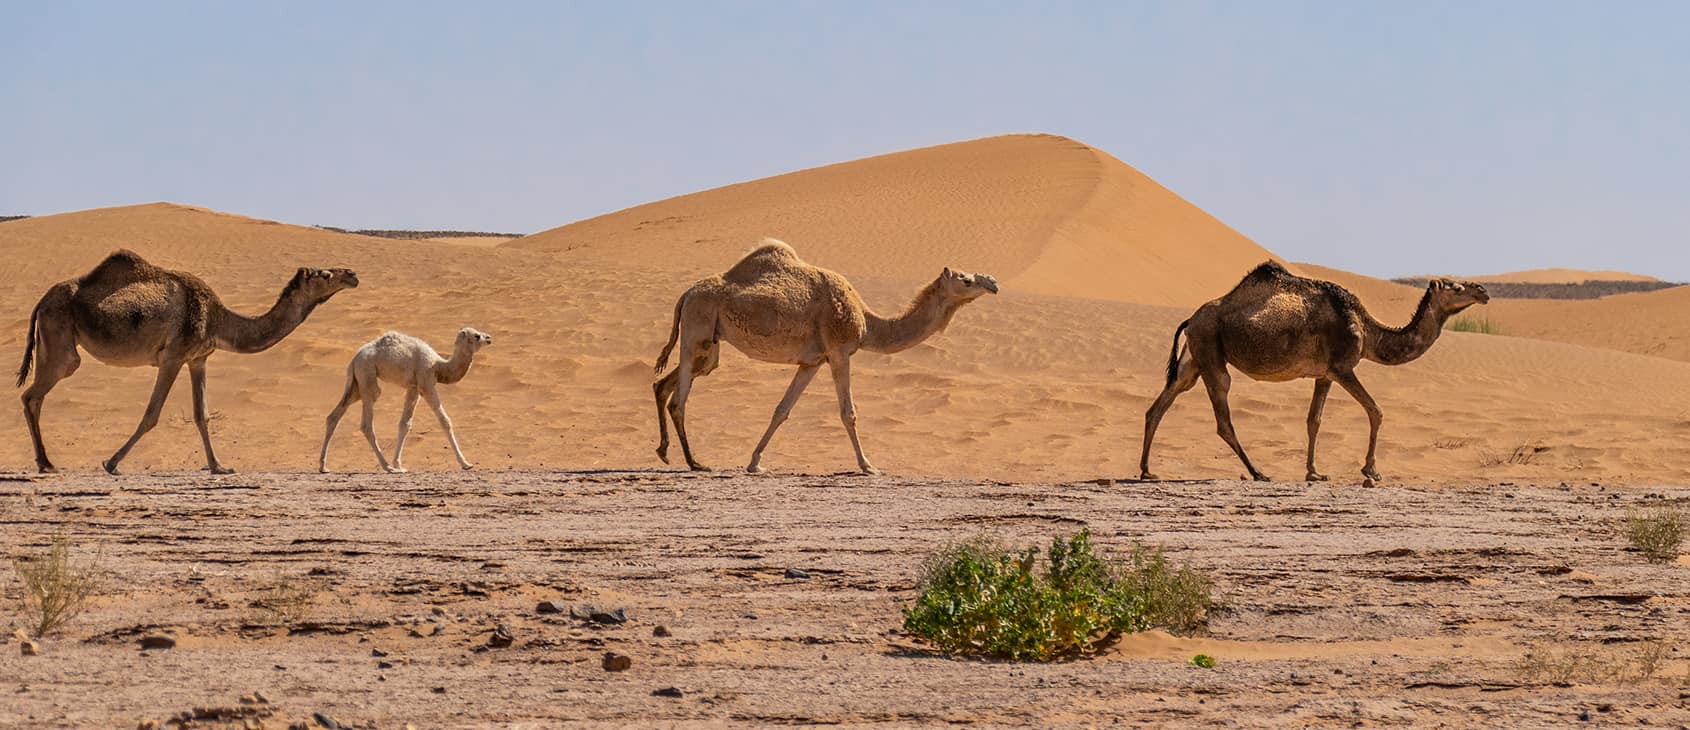 Camels - ships of the desert